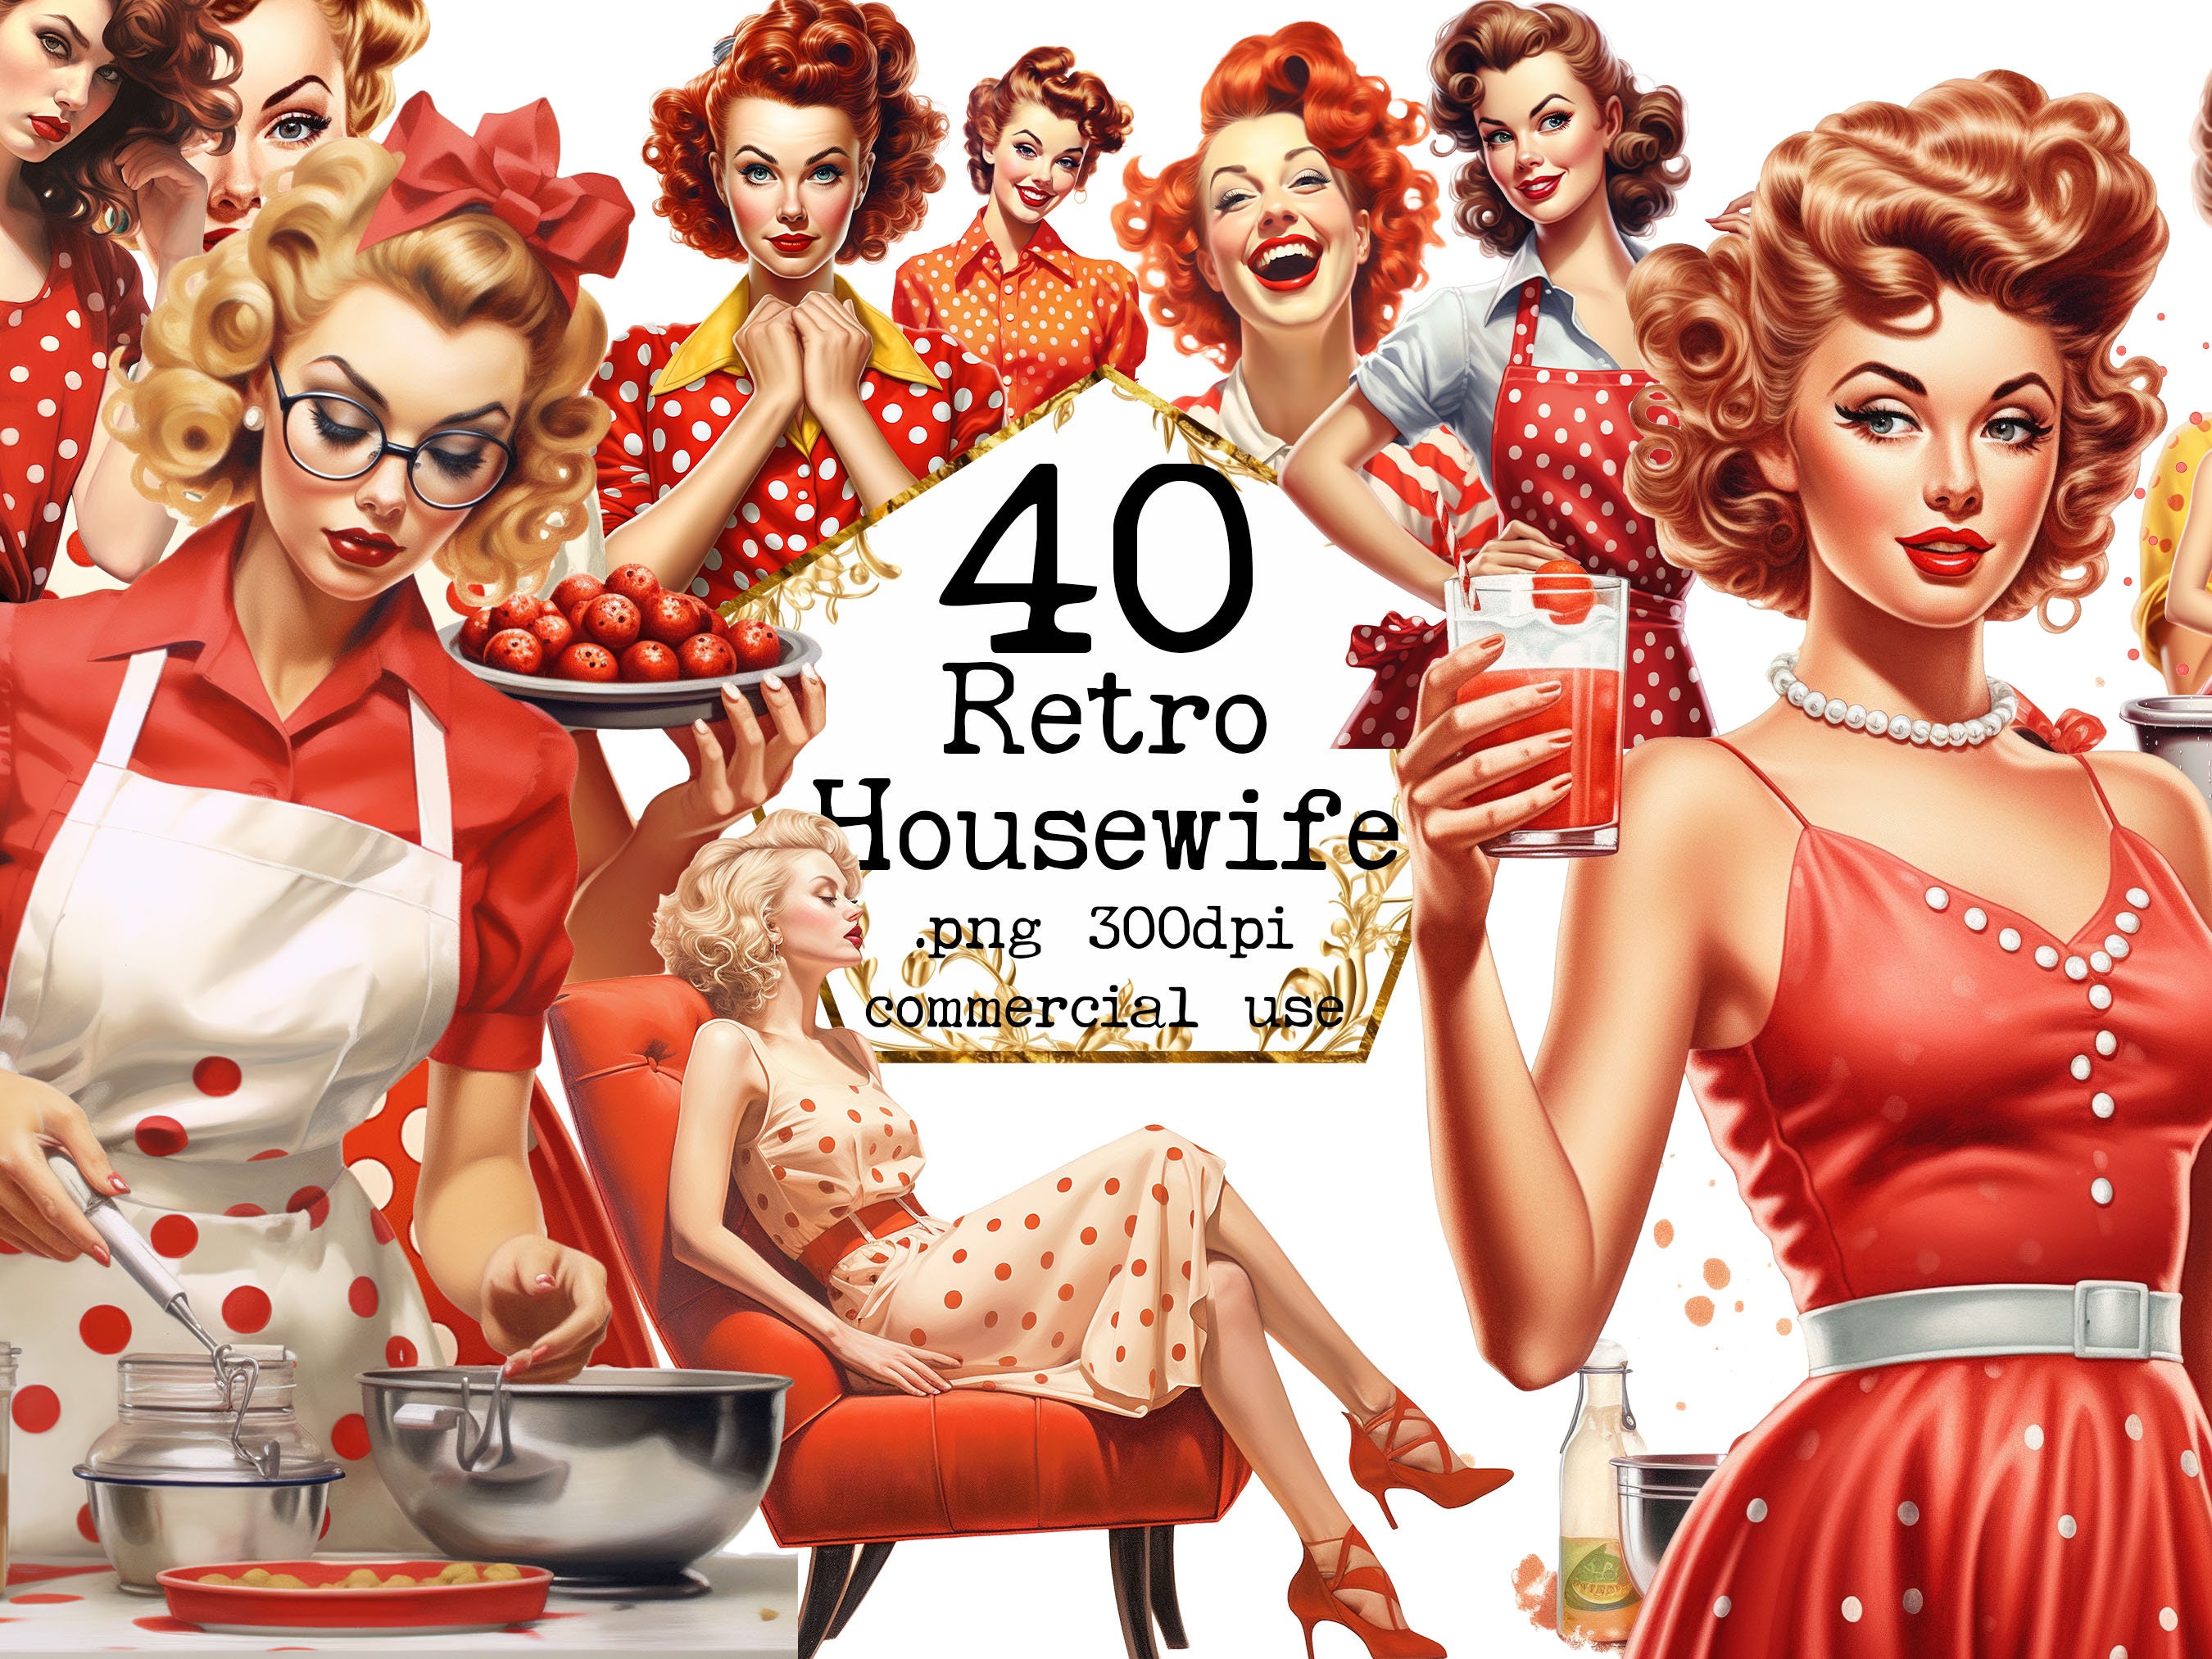 1950s Housewife